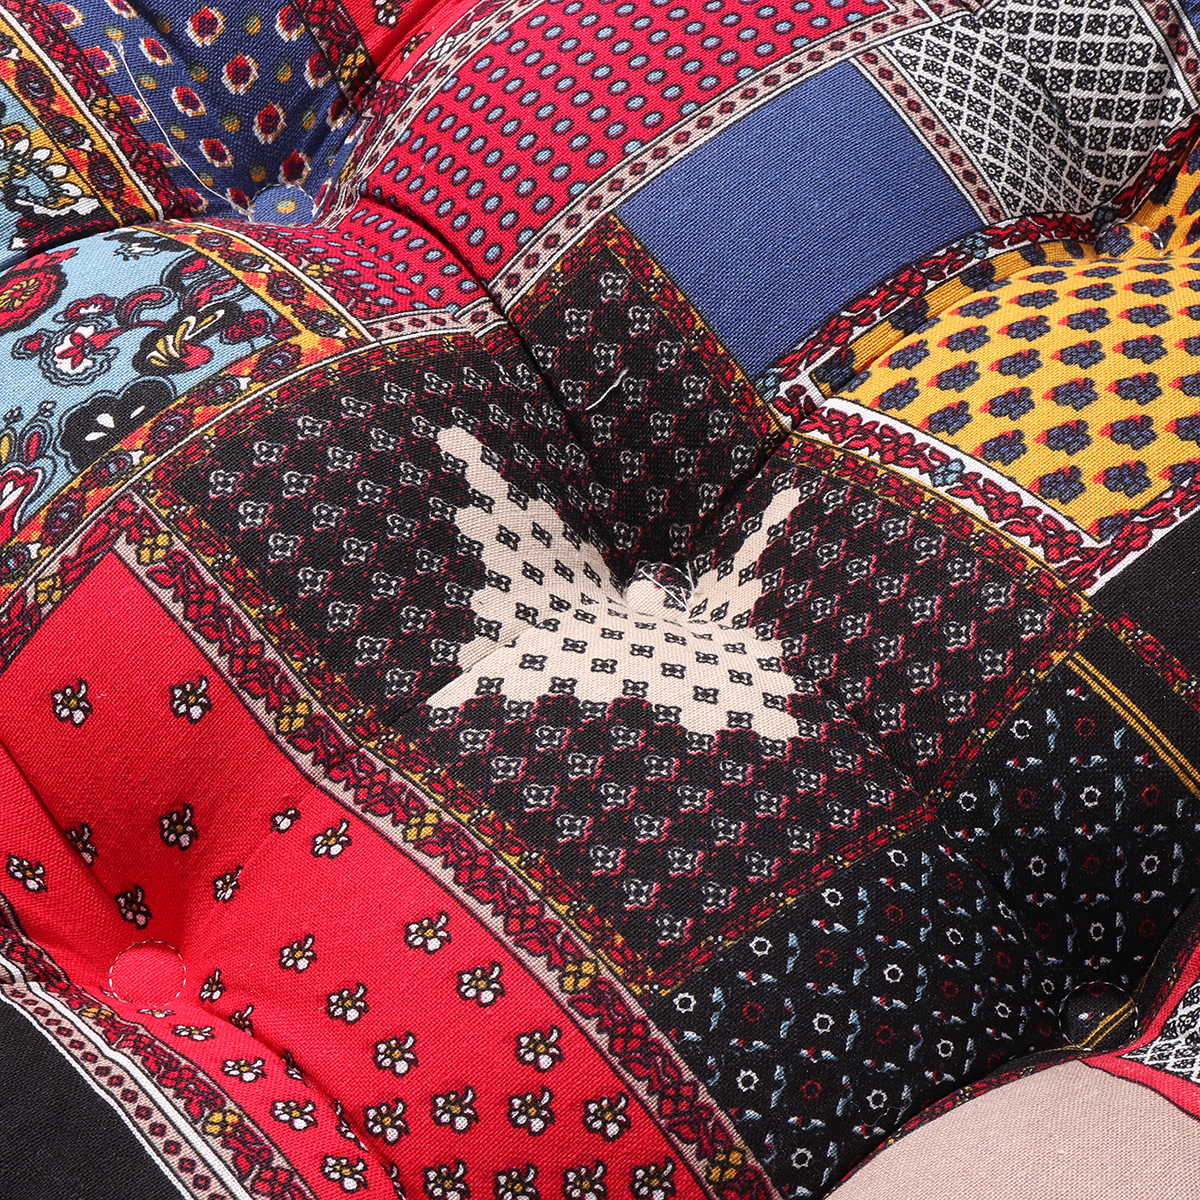 55x55x10cm-Square-Tatami-Cushion-Cotton-Linen-Floor-Pillow-Chair-Seat-Pad-Mat-1842990-5